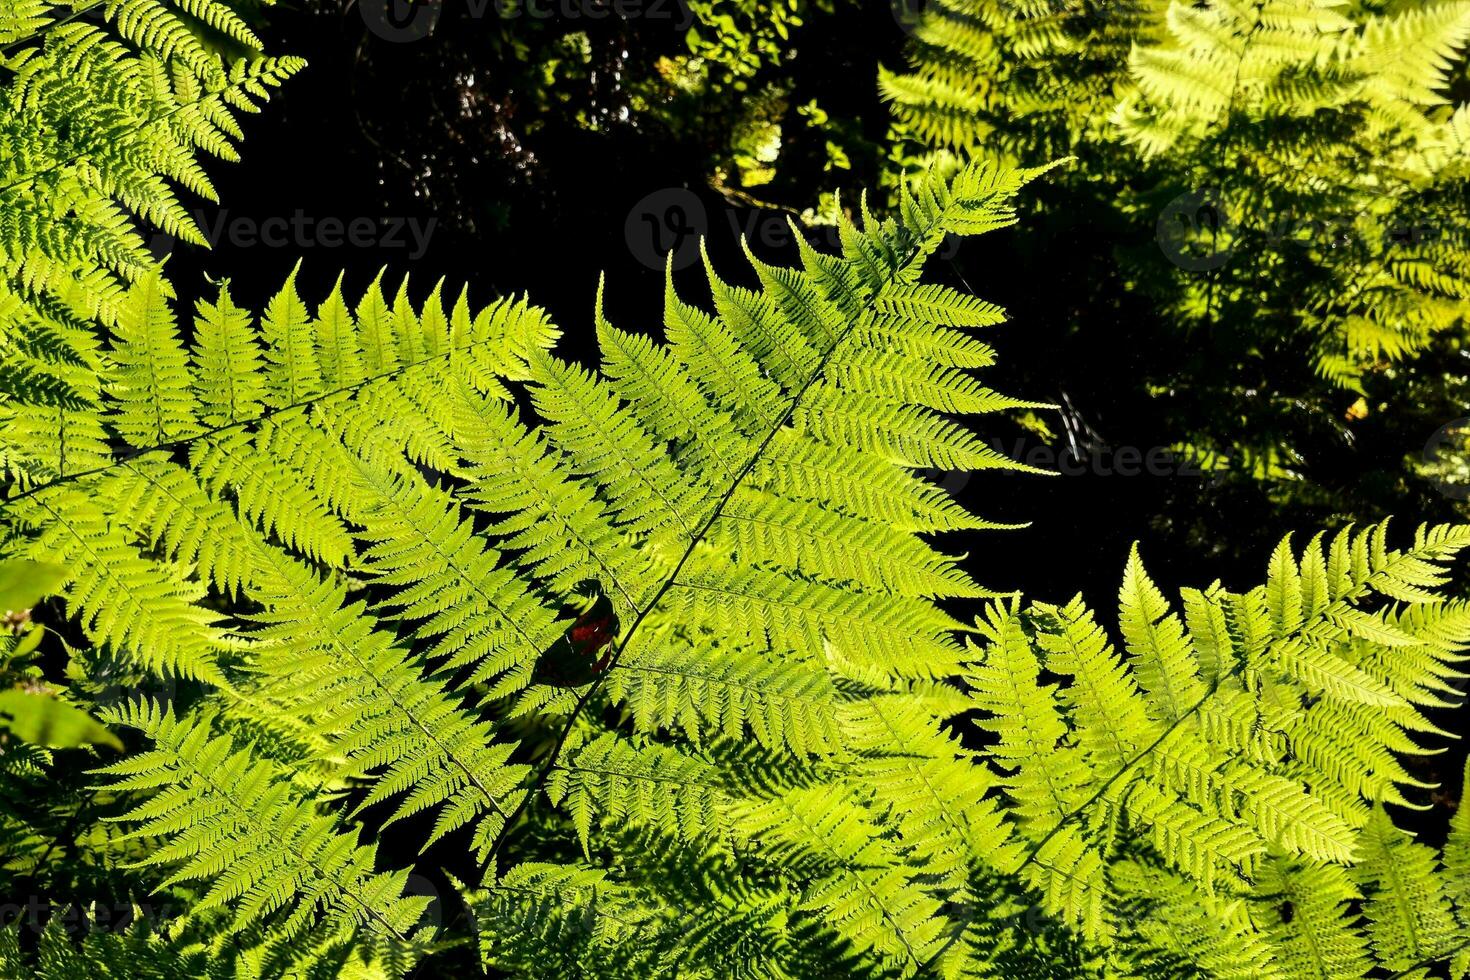 Green foliage close-up photo